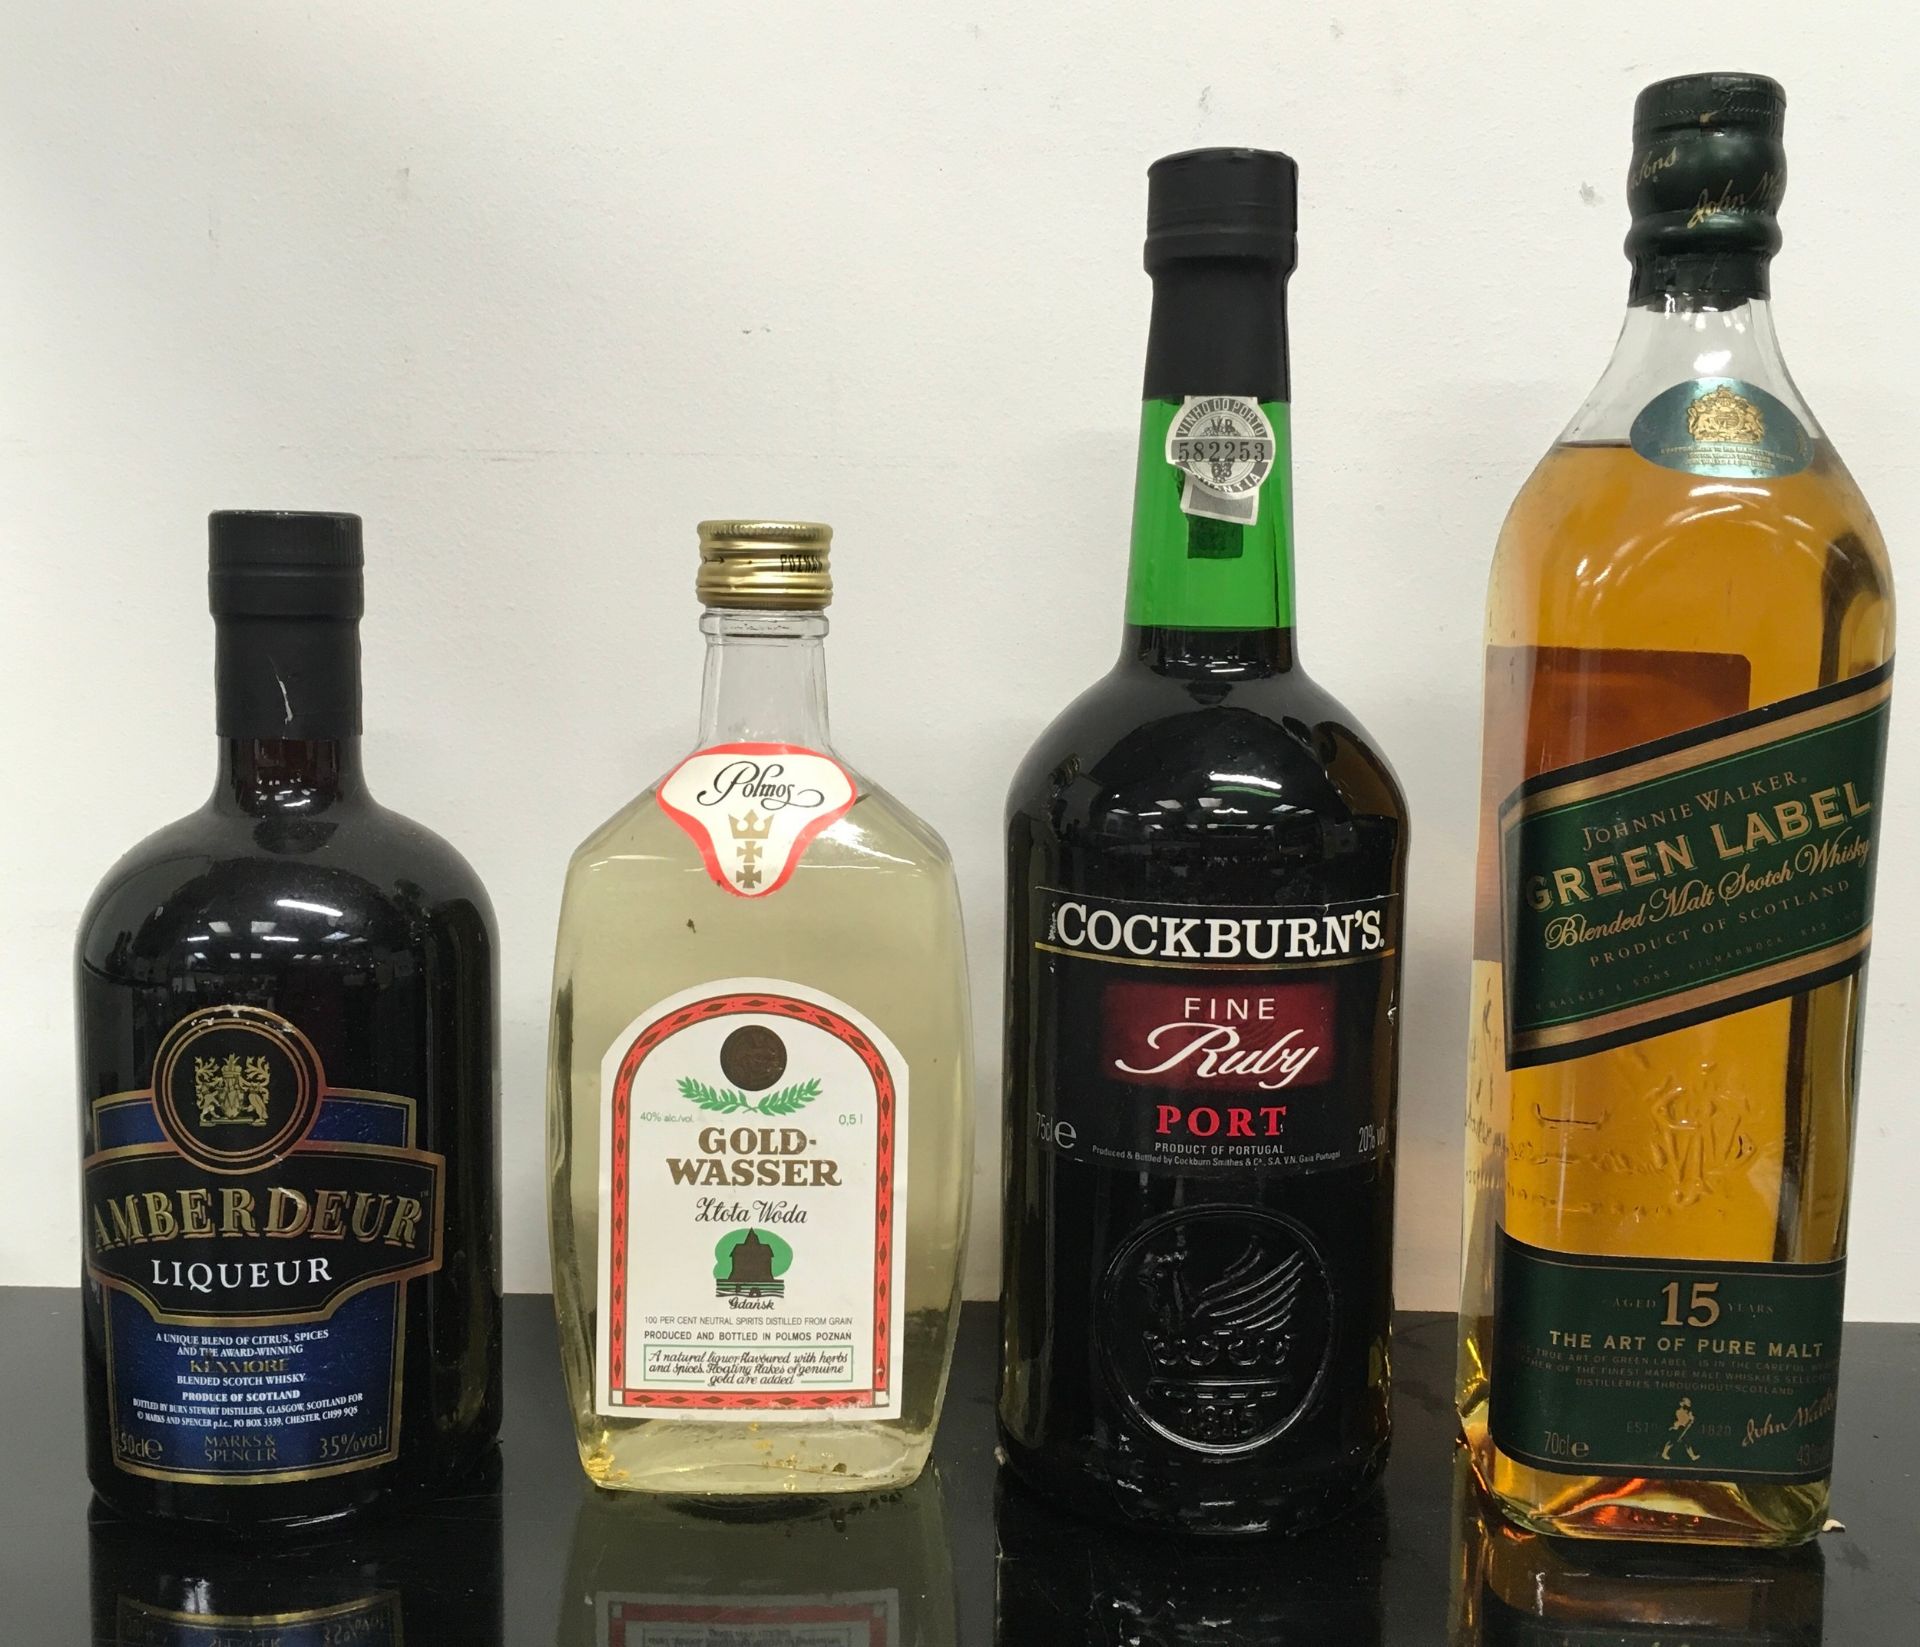 4 bottles of alcohol: Johnnie Walker Green Label Scotch Whiskey 700ml, Amberdeur Liqueur 500ml, Gold